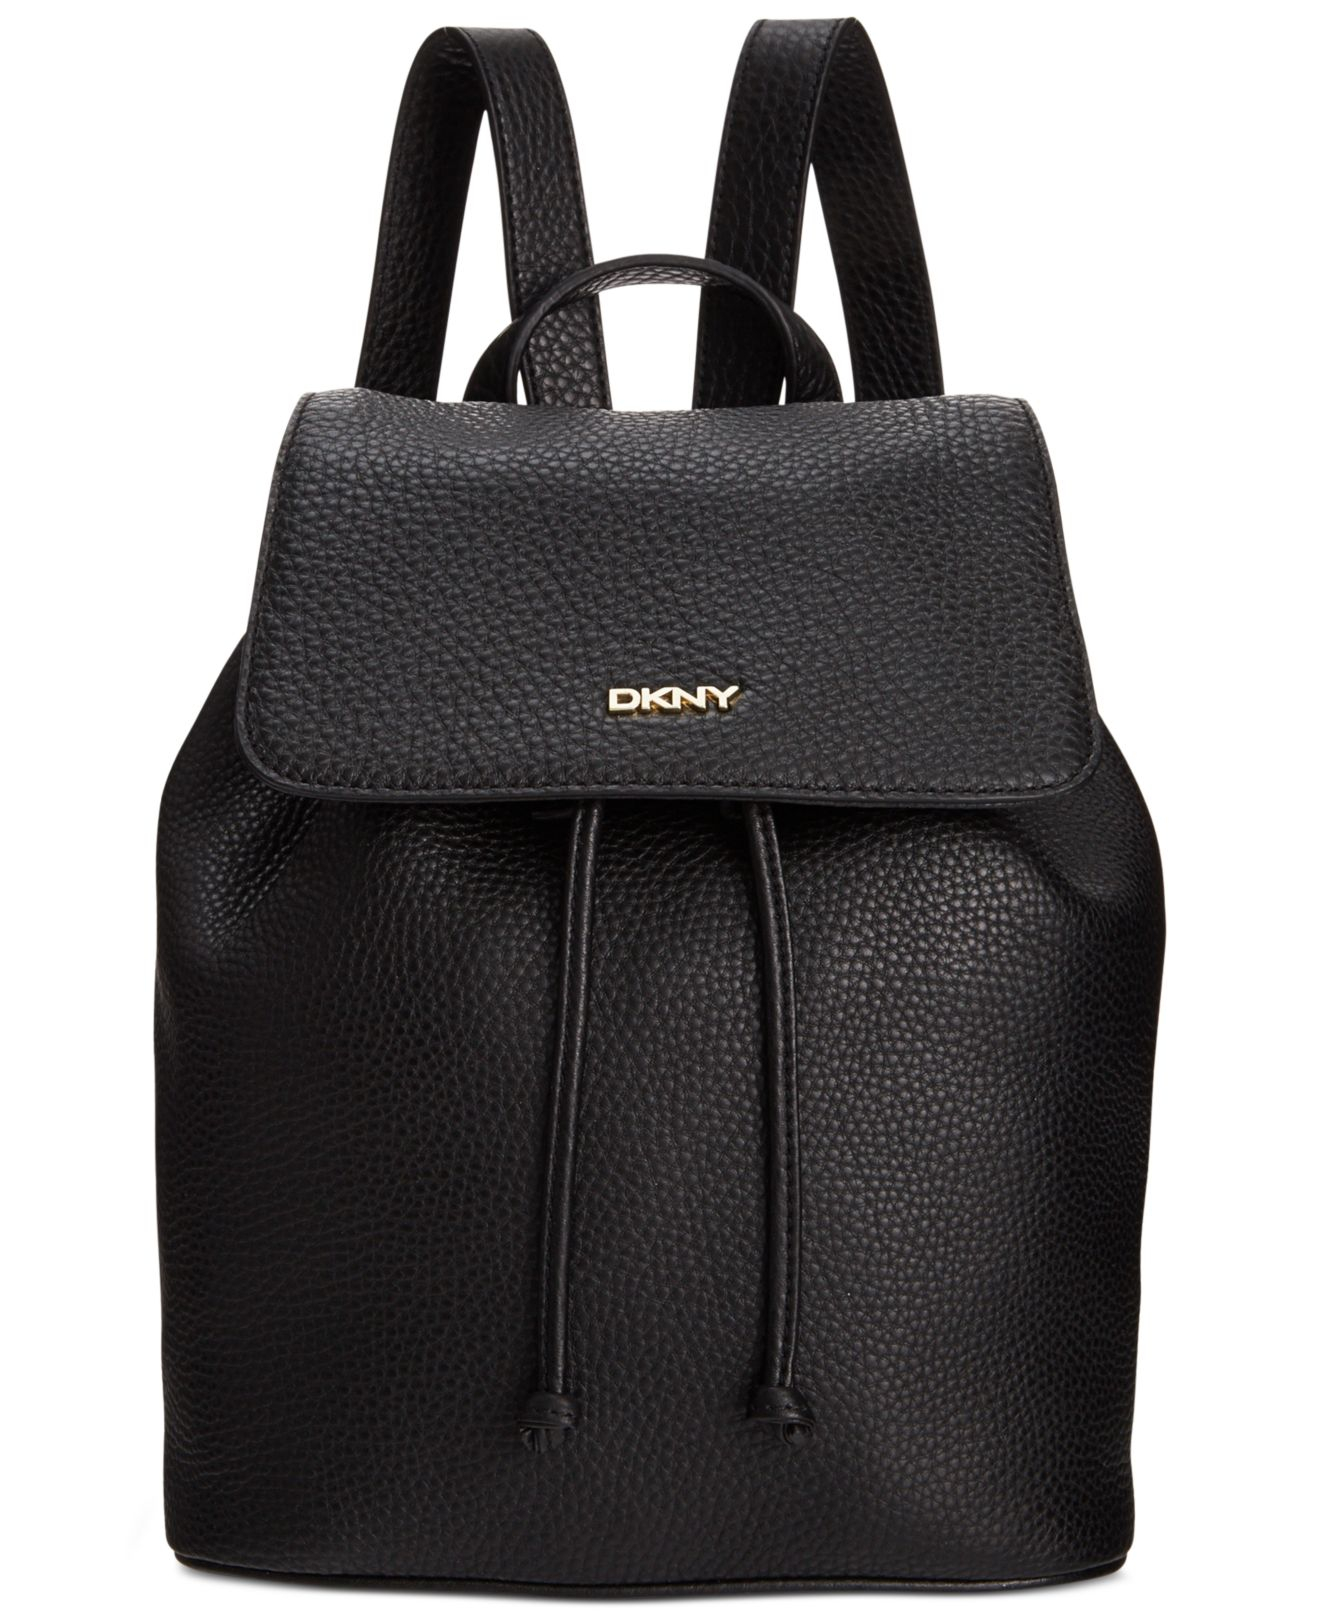 Lyst - Dkny Tribeca Backpack in Black